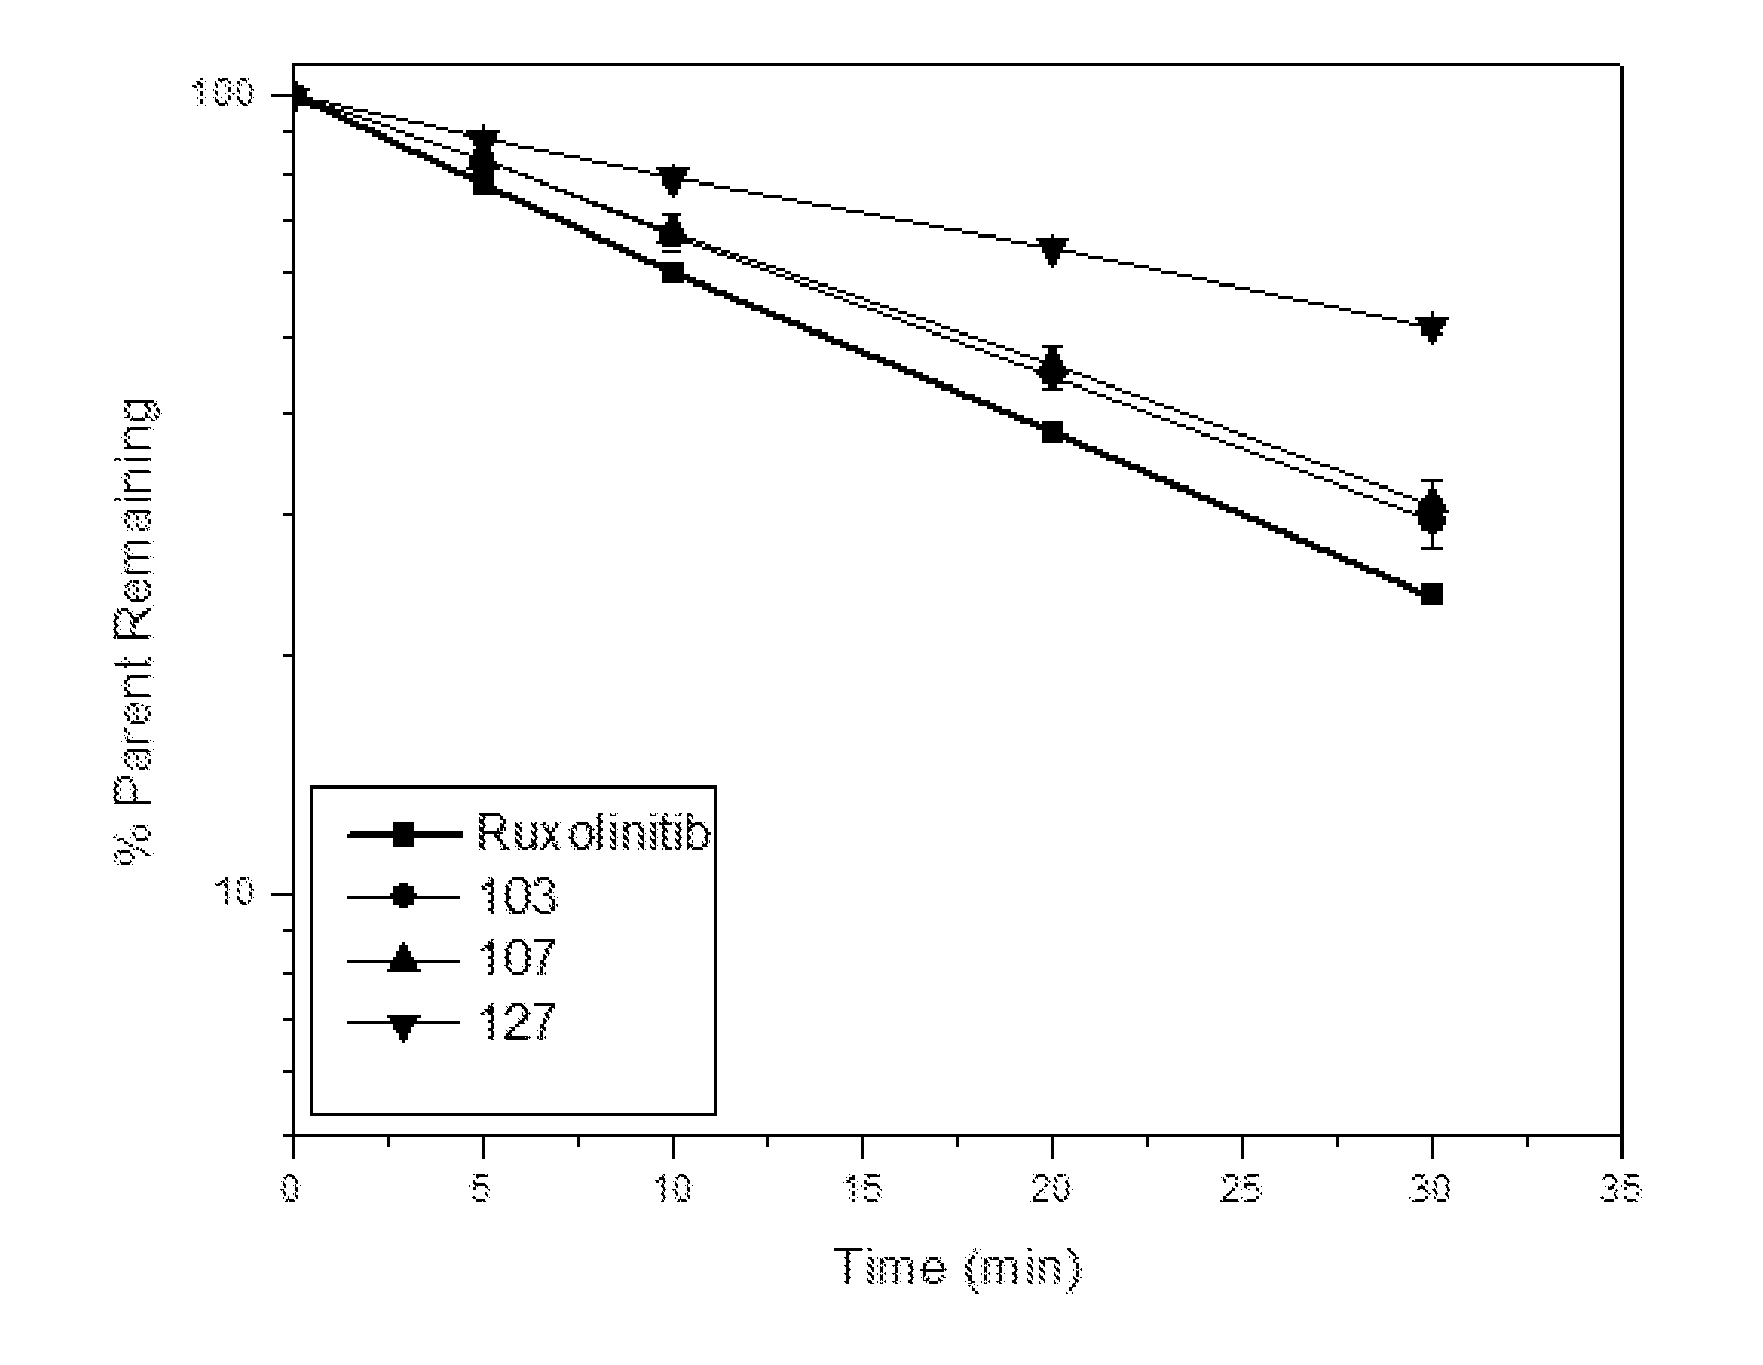 Deuterated derivatives of ruxolitinib